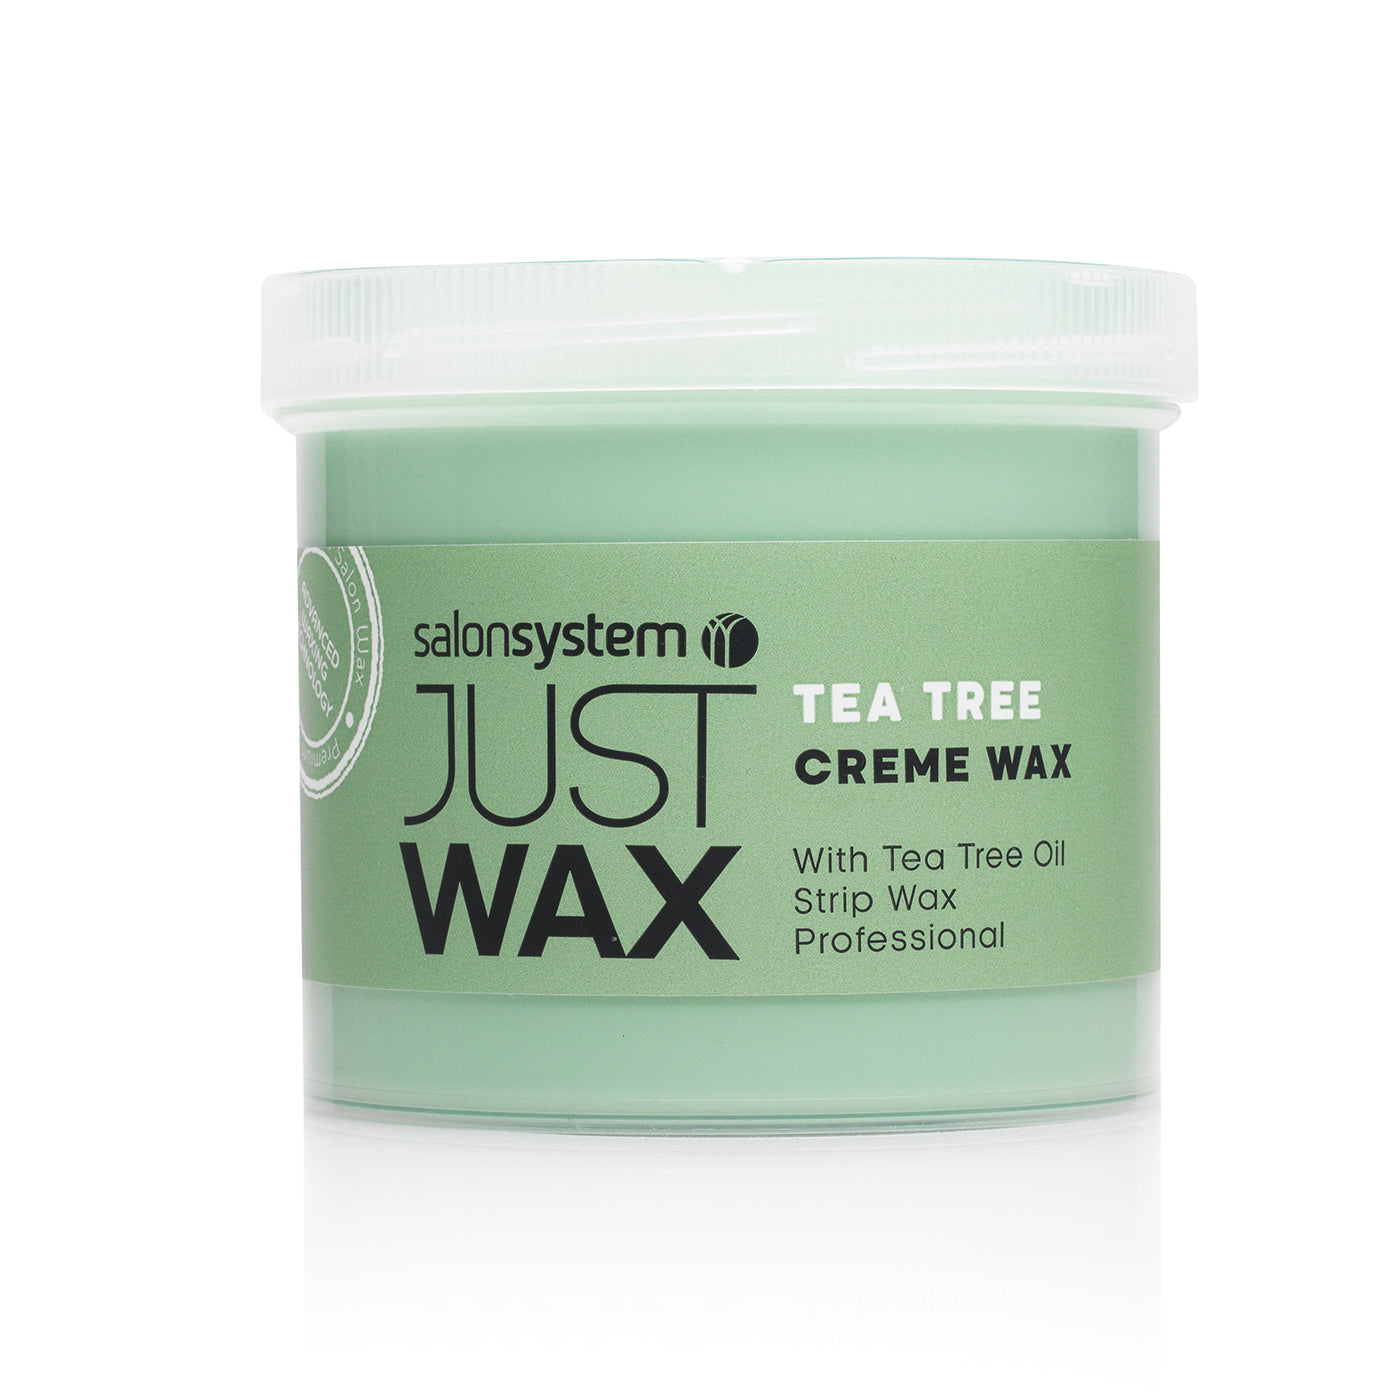 Just Wax Tea Tree Creme Wax (450g) - Ultimate Hair and Beauty